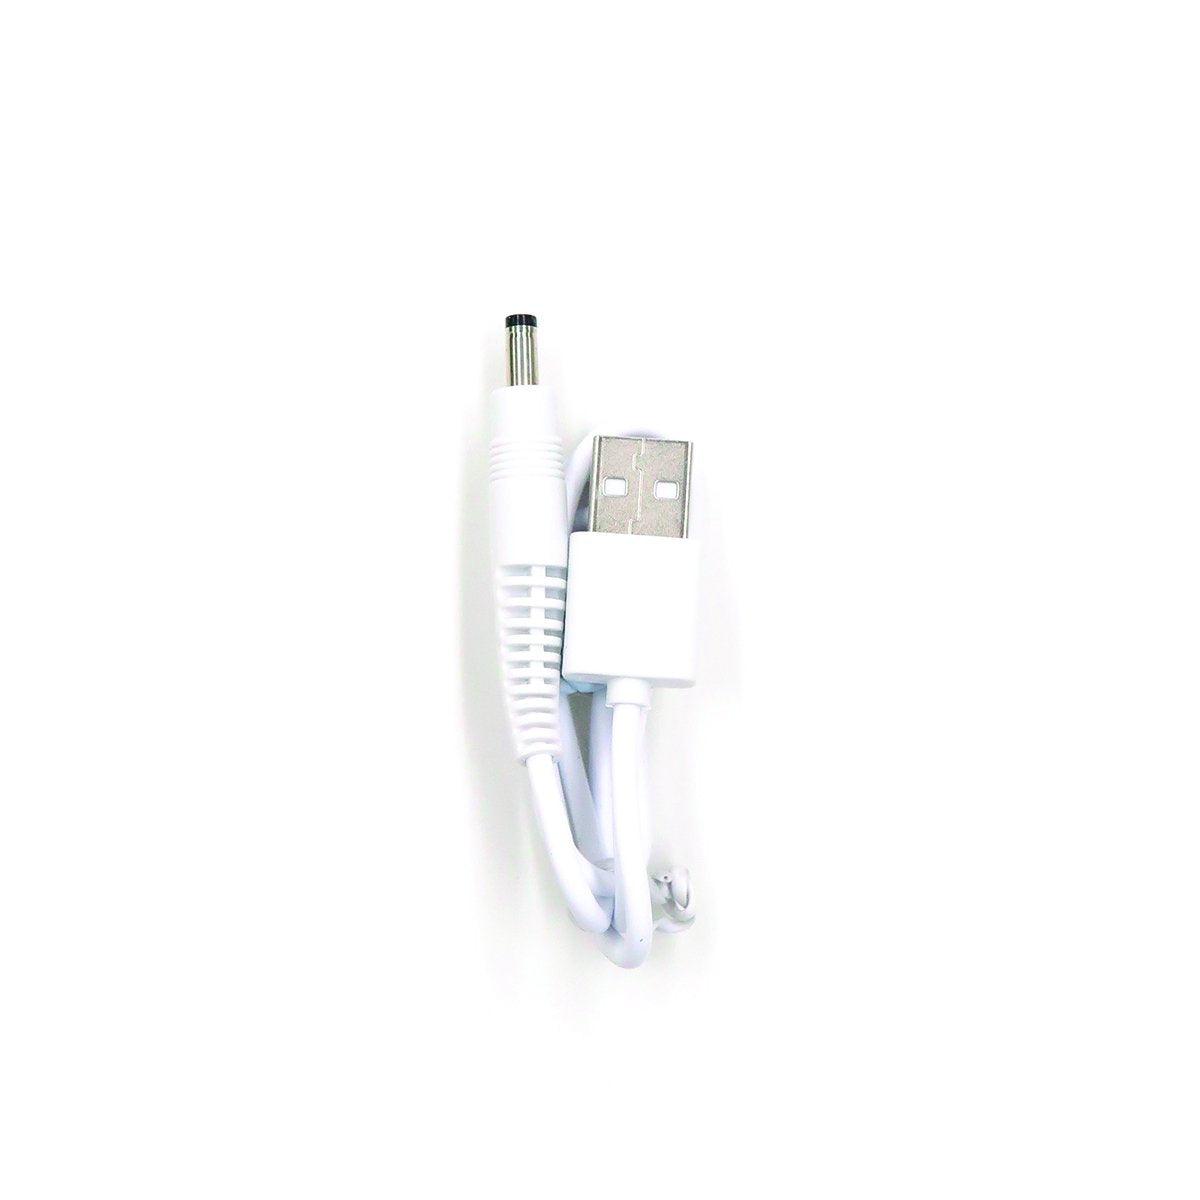 Aquamarine VeDO USB Charger B